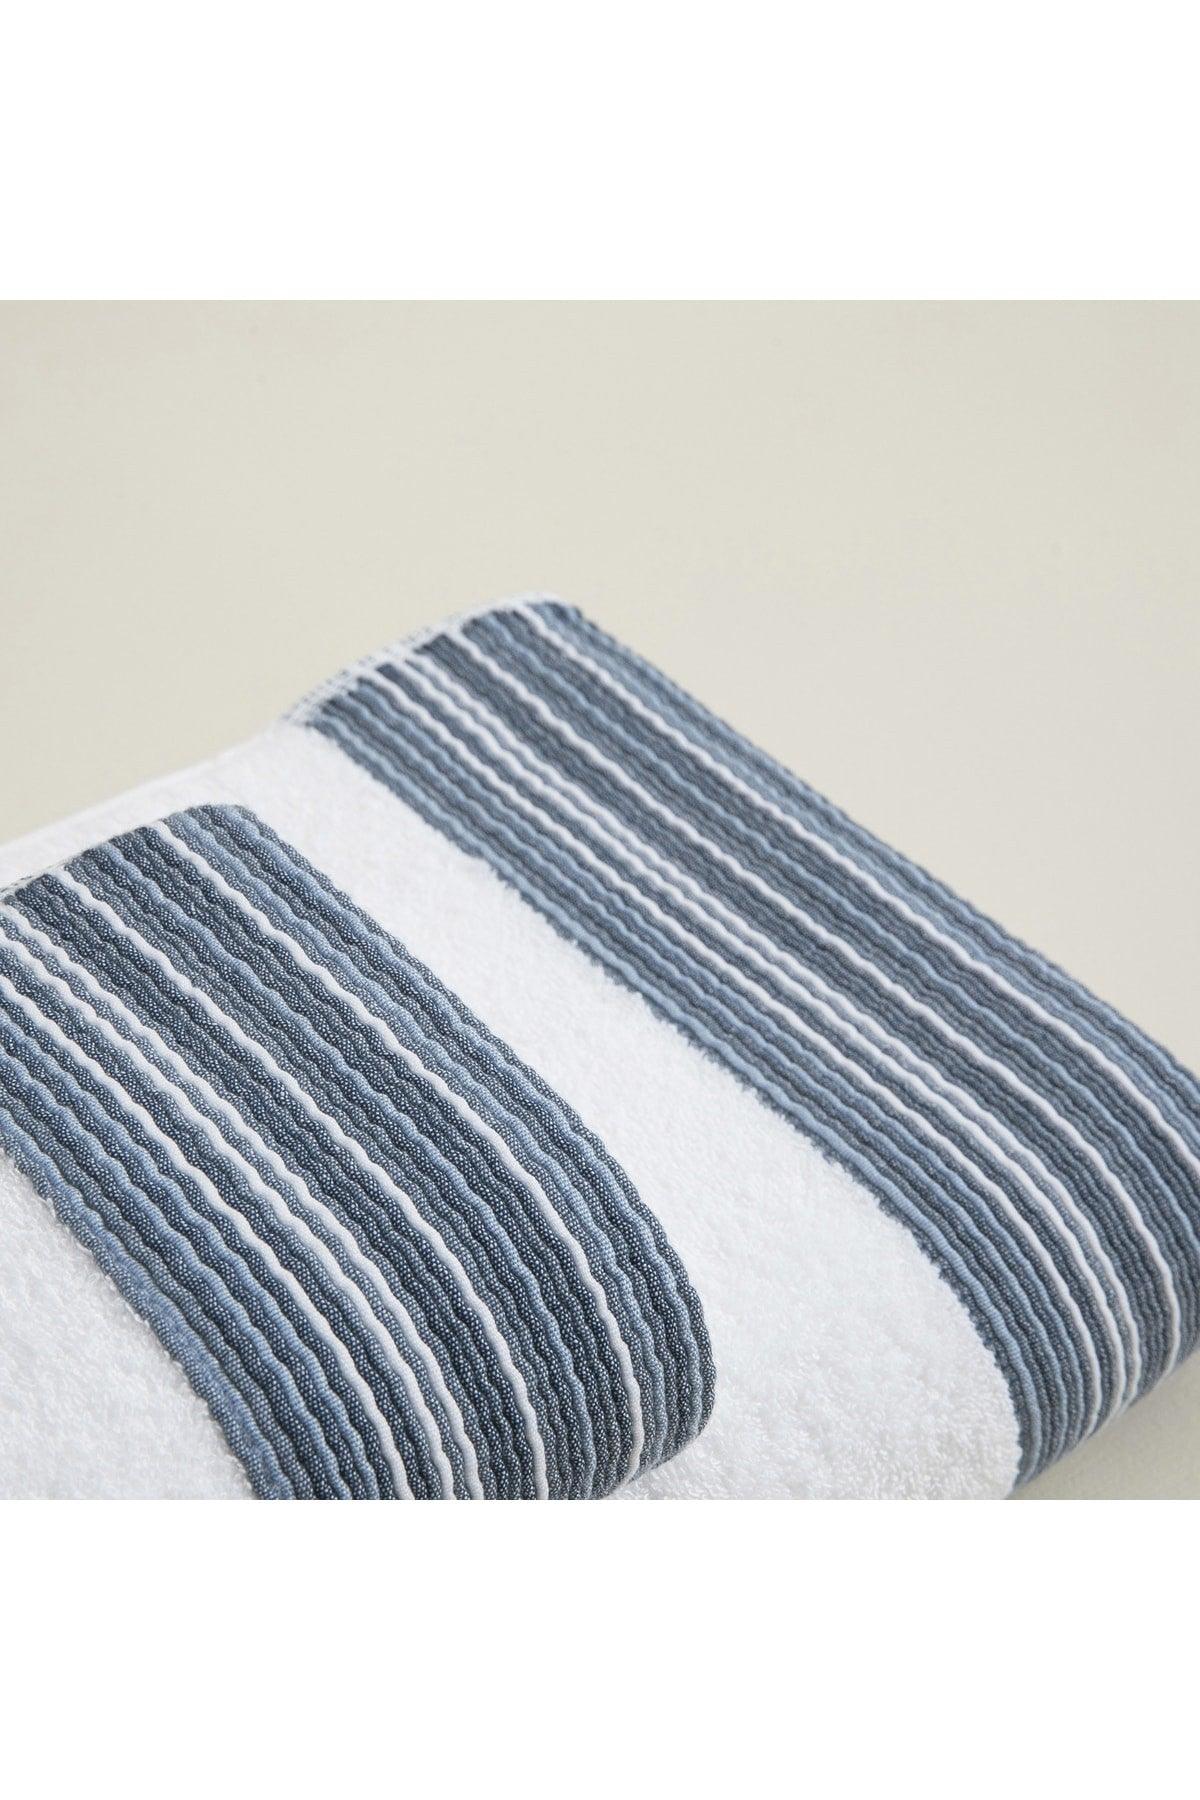 Sonhe Hand Towel 30x50 Cm White - Swordslife